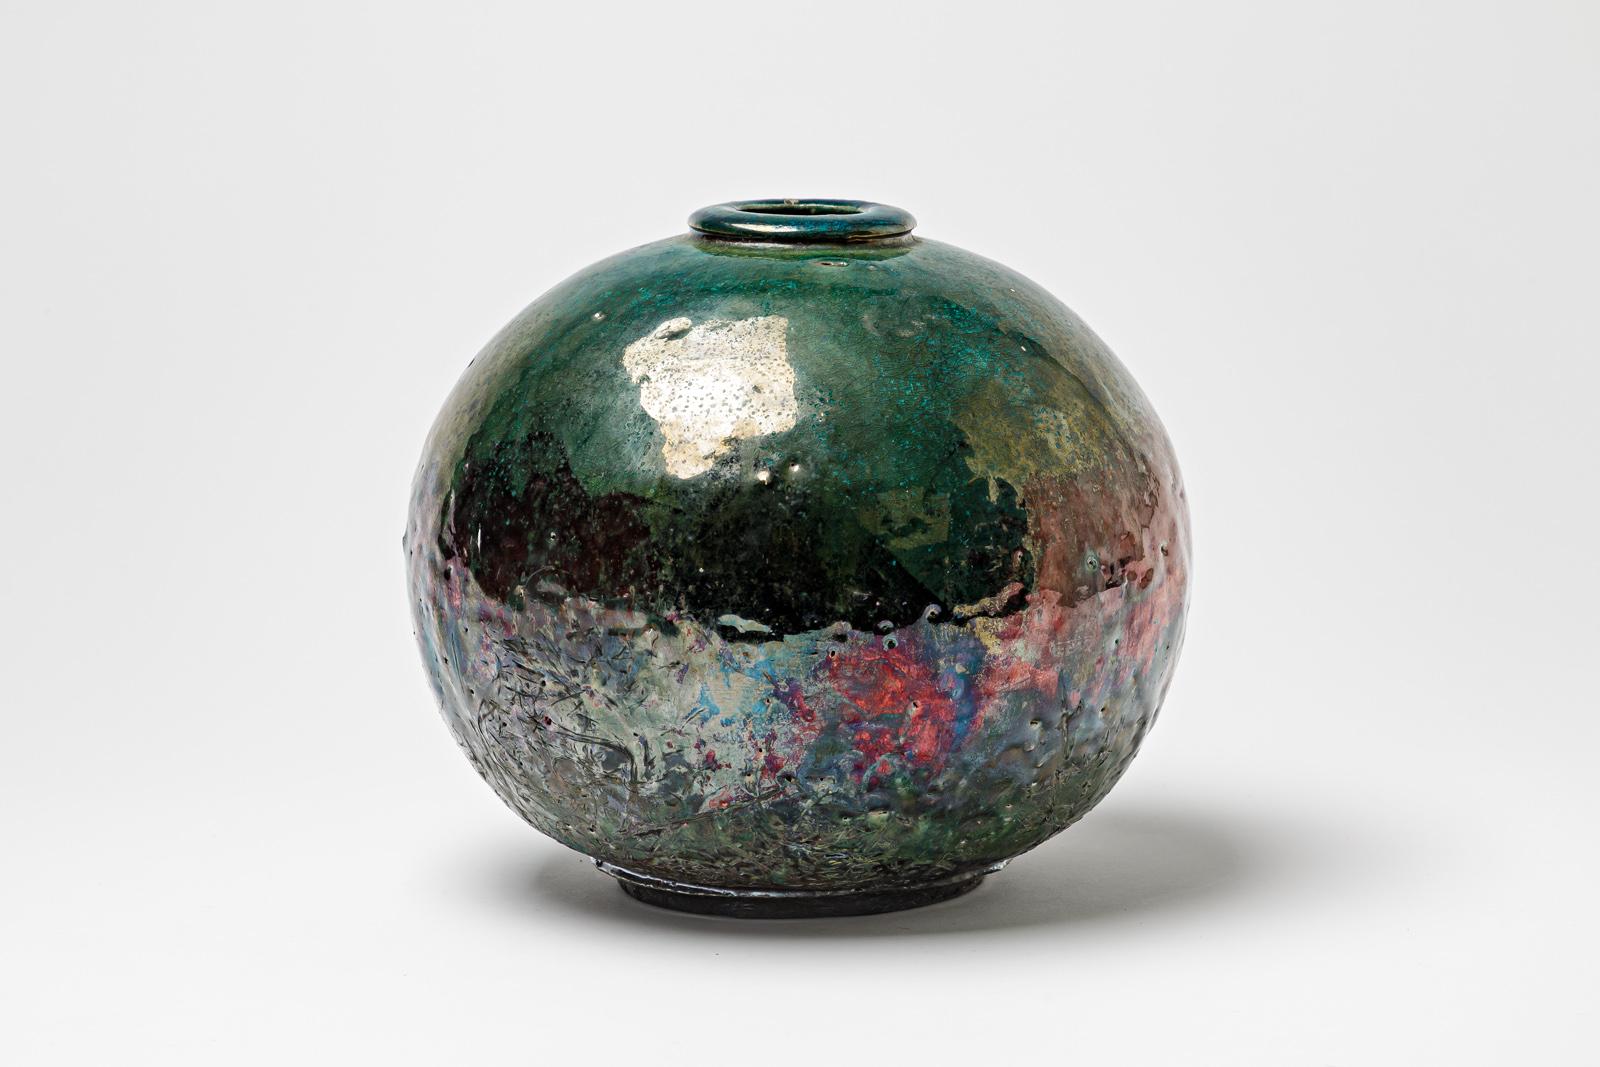 Beaux Arts Green glazed ceramic vase with metallic highlights by Gisèle Buthod Garçon, 1990 For Sale